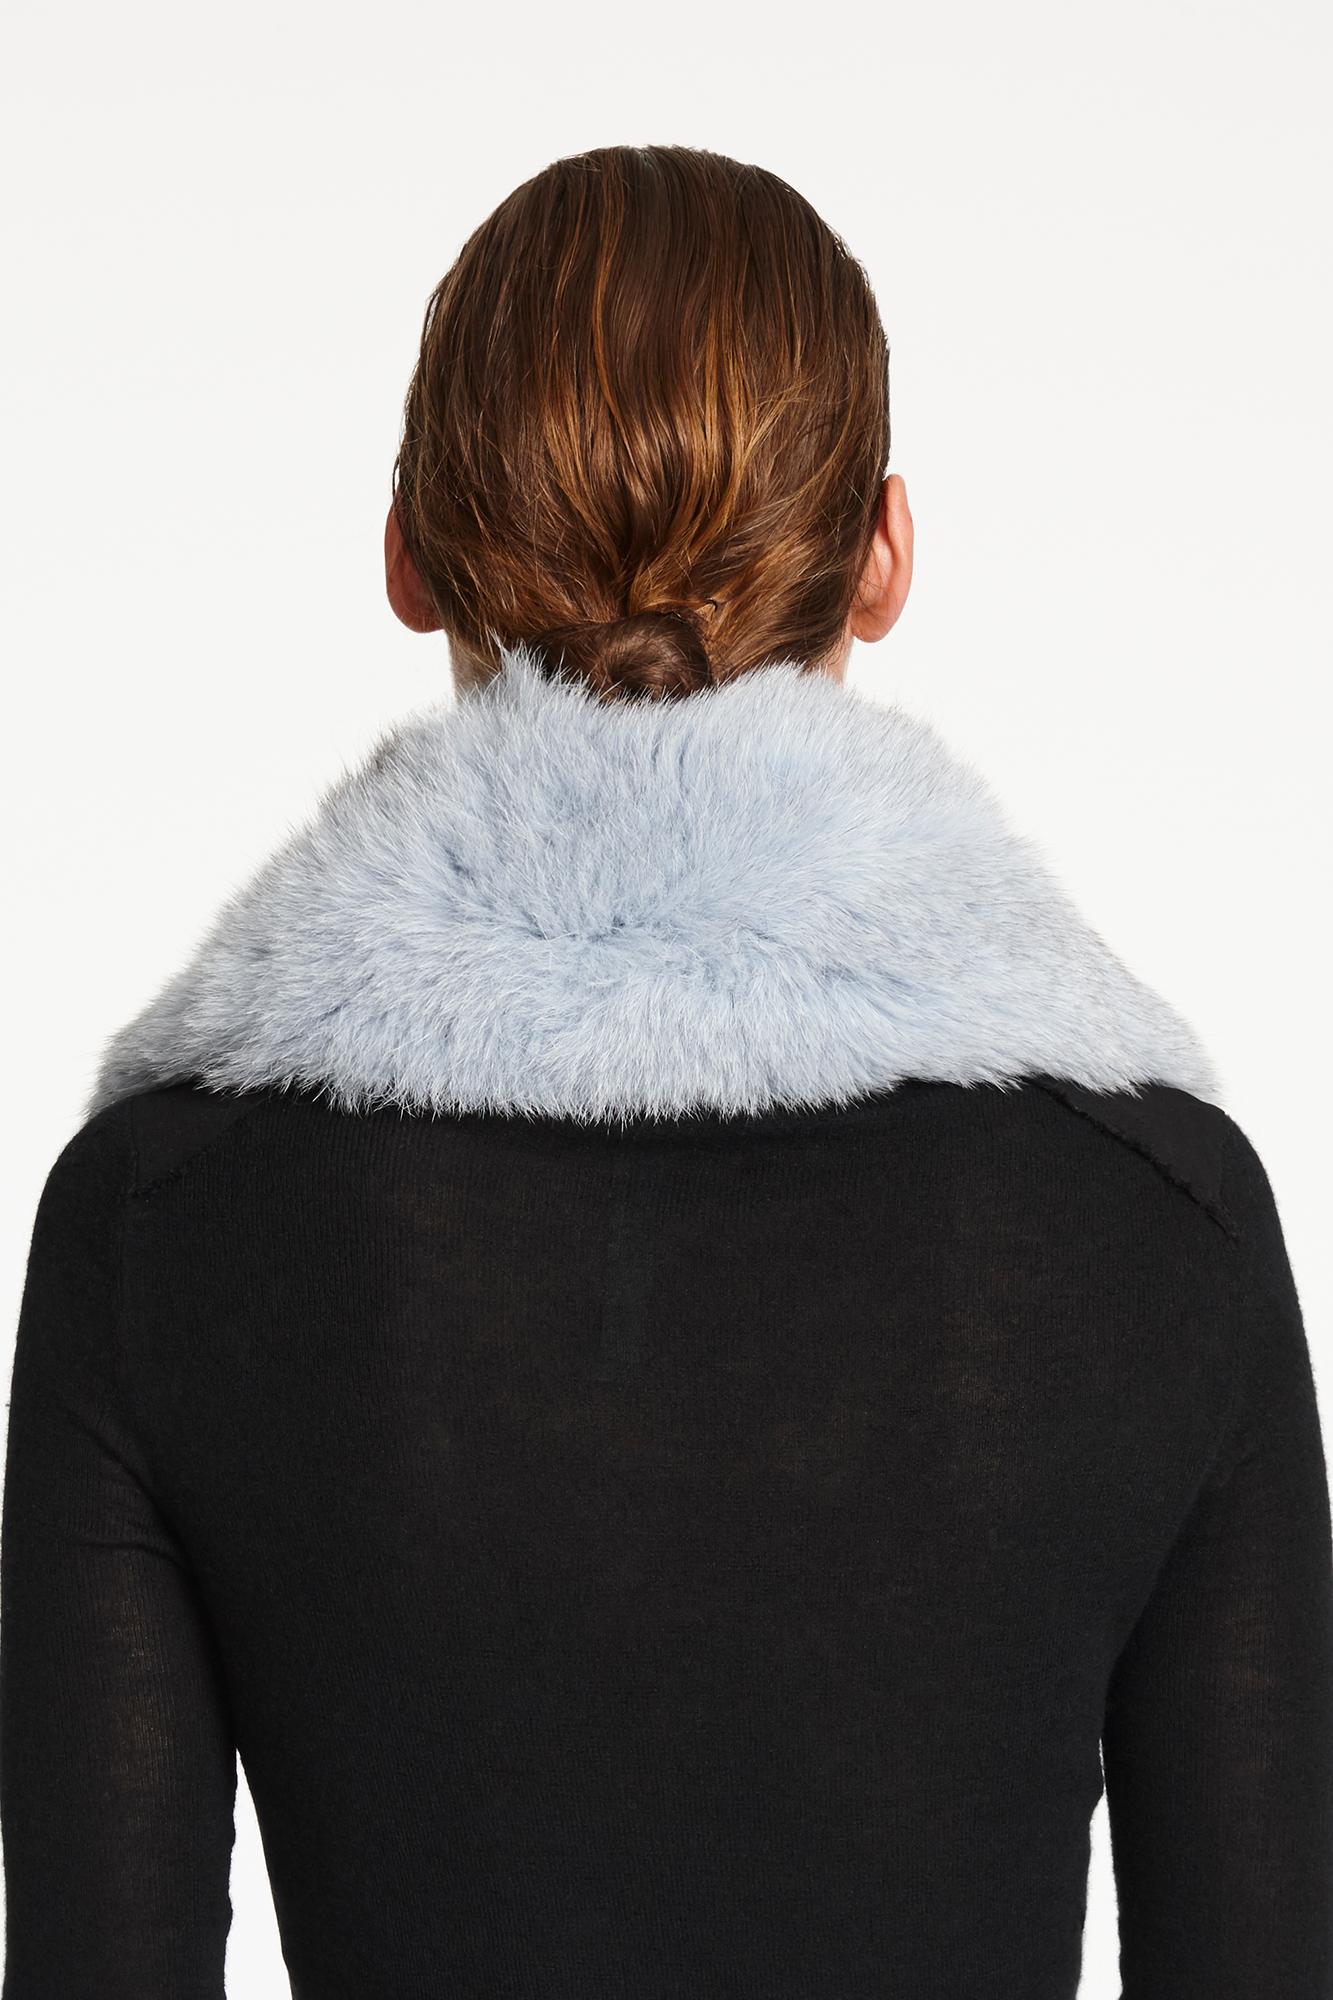 Verheyen London Peter Pan Collar in Iced Blue Fox Fur & lined in silk  2